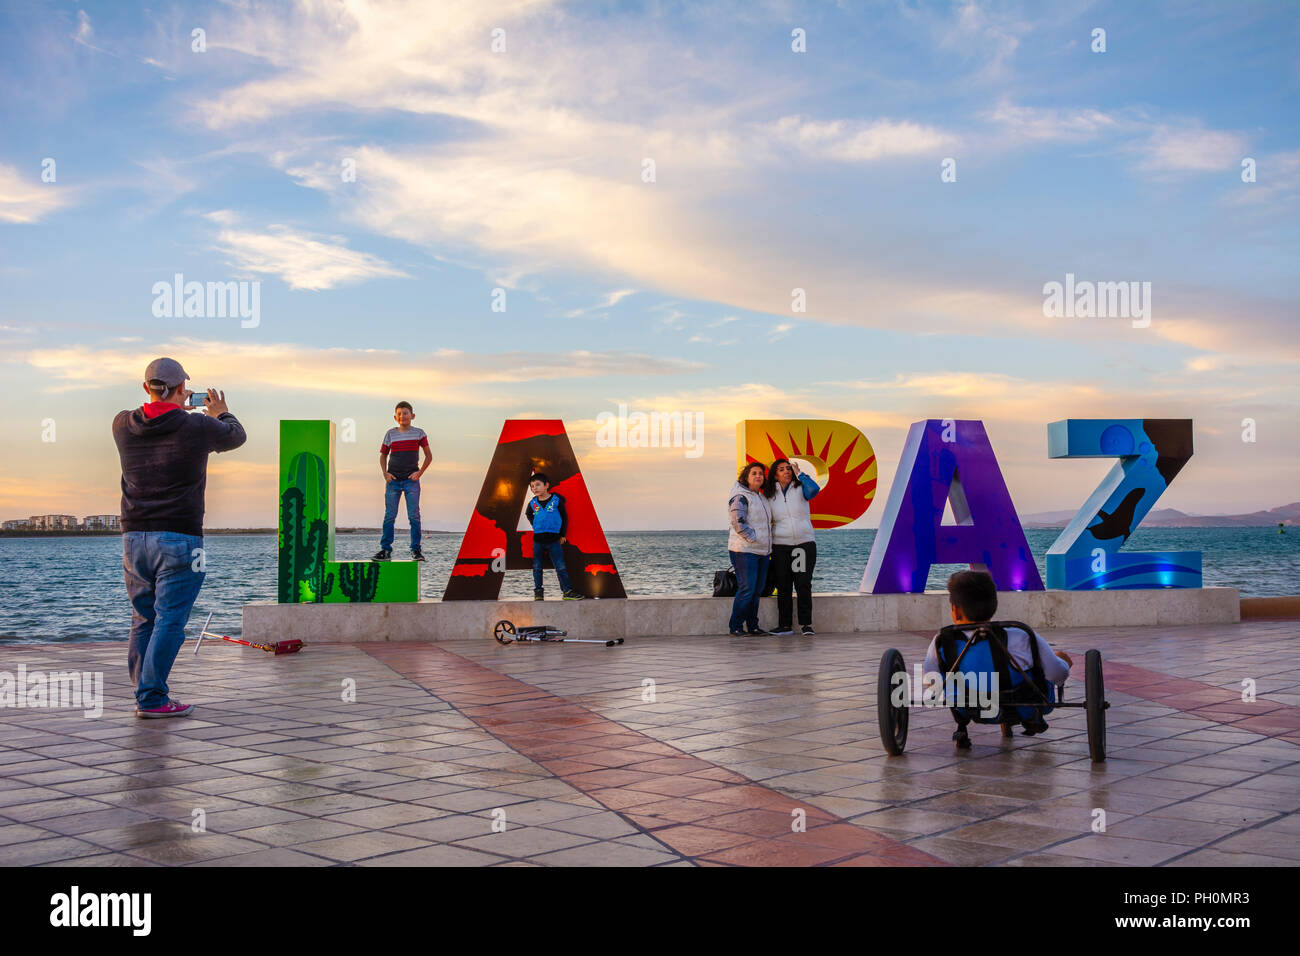 Visitors taking photos at the 'La Paz' Pueblos Magicos sign on the malecon in La Paz, Baja California Sur, Mexico. Stock Photo